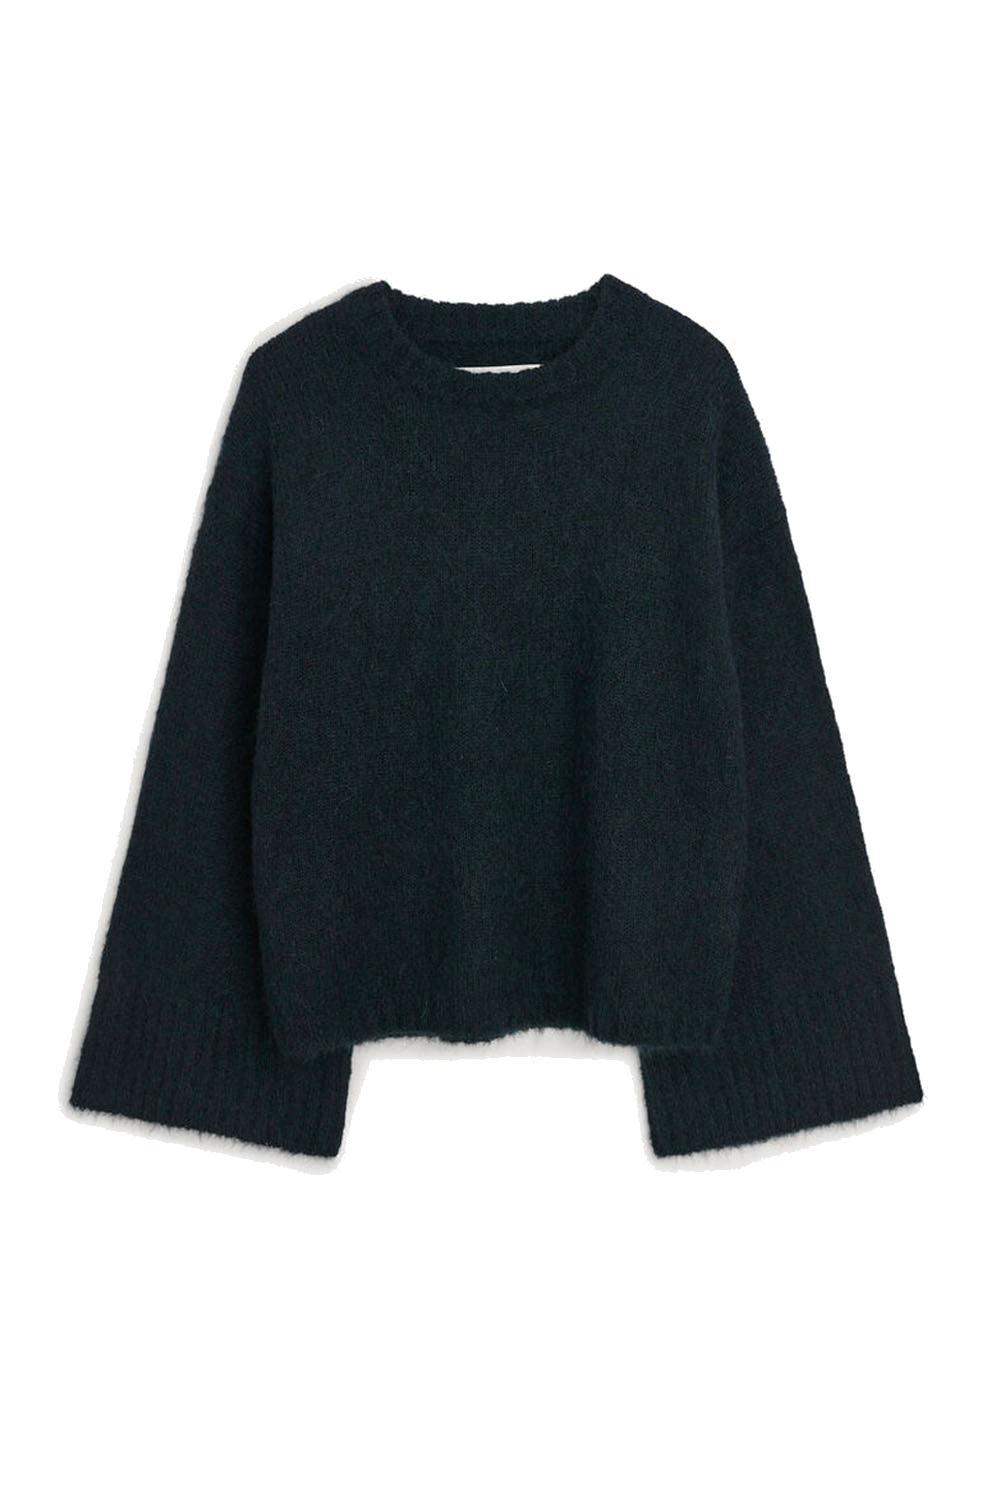 Cierra sweater Black